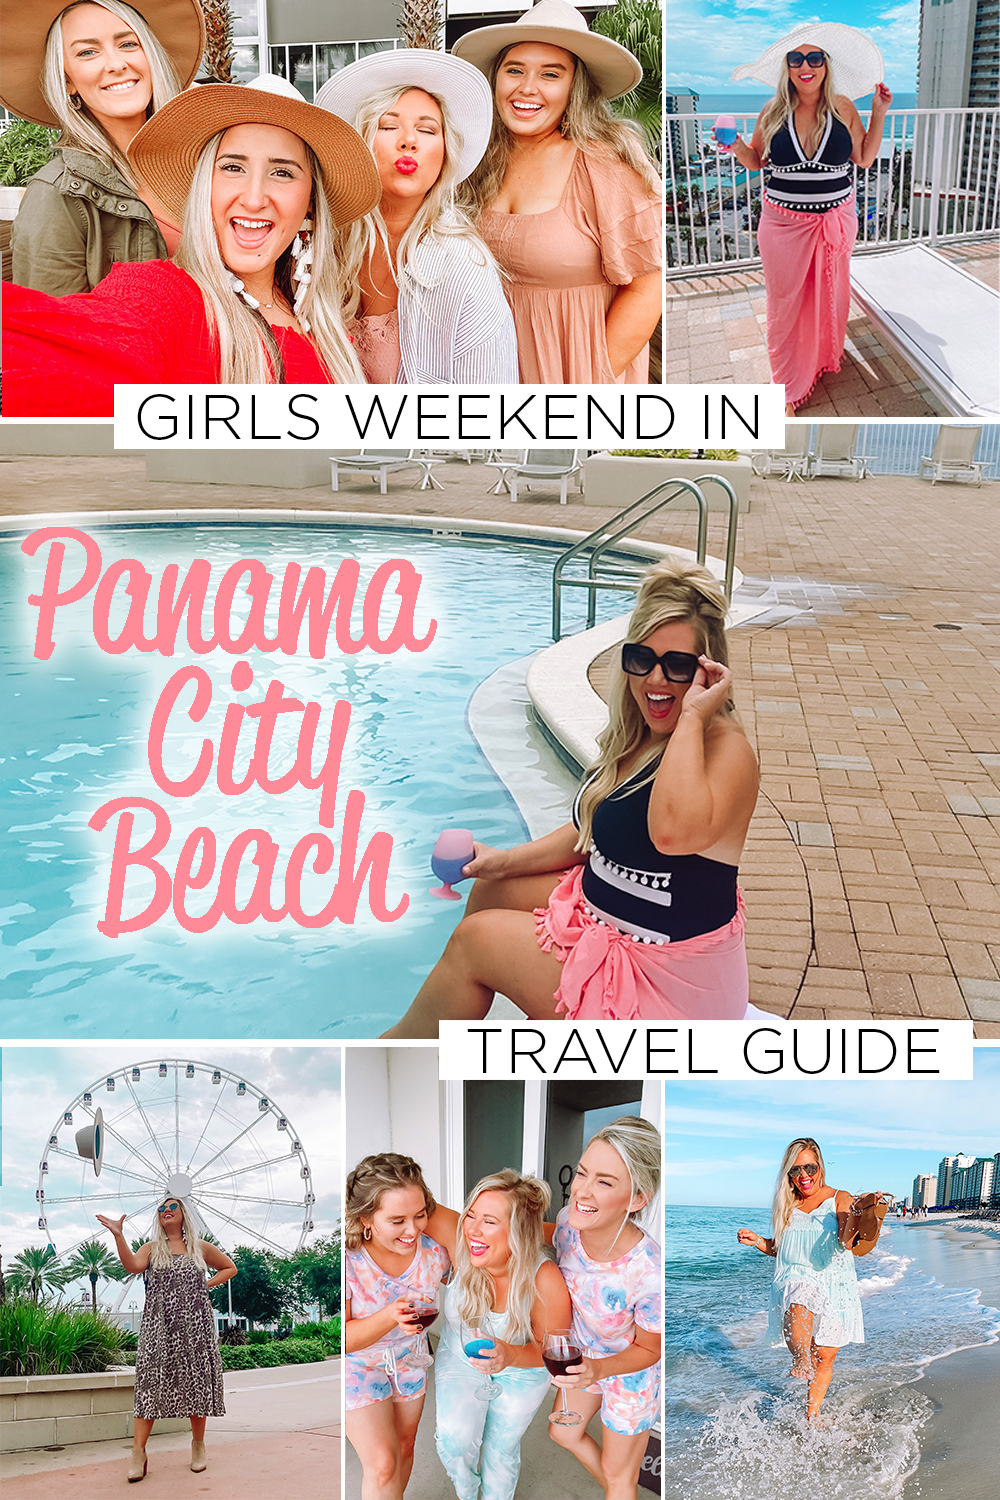 Travel Guide: Girls Weekend in Panama City Beach